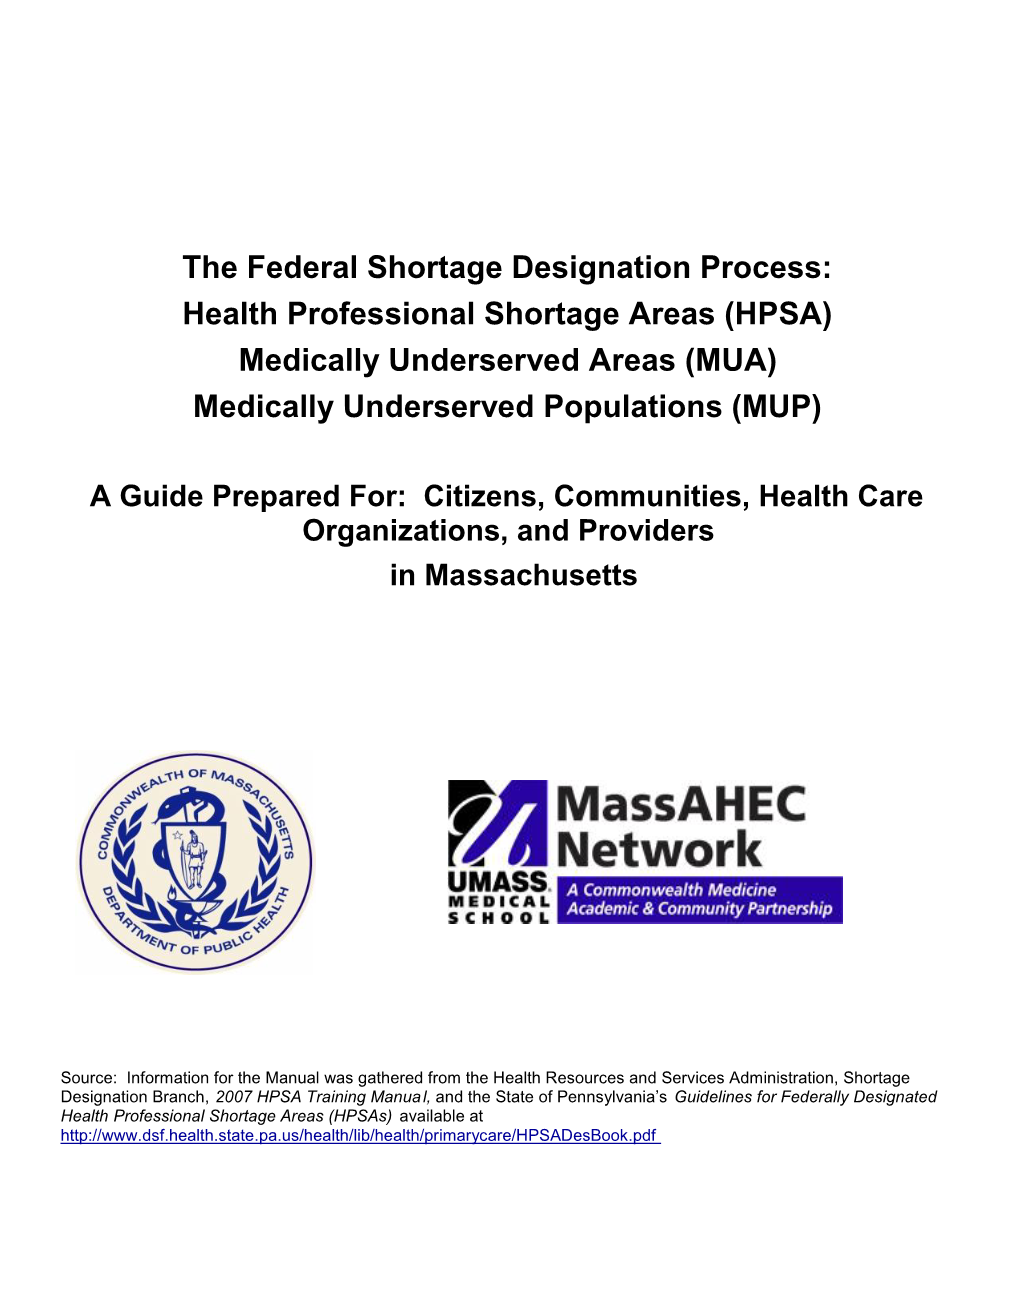 Health Professional Shortage Areas (HPSA) Medically Underserved Areas (MUA) Medically Underserved Populations (MUP)